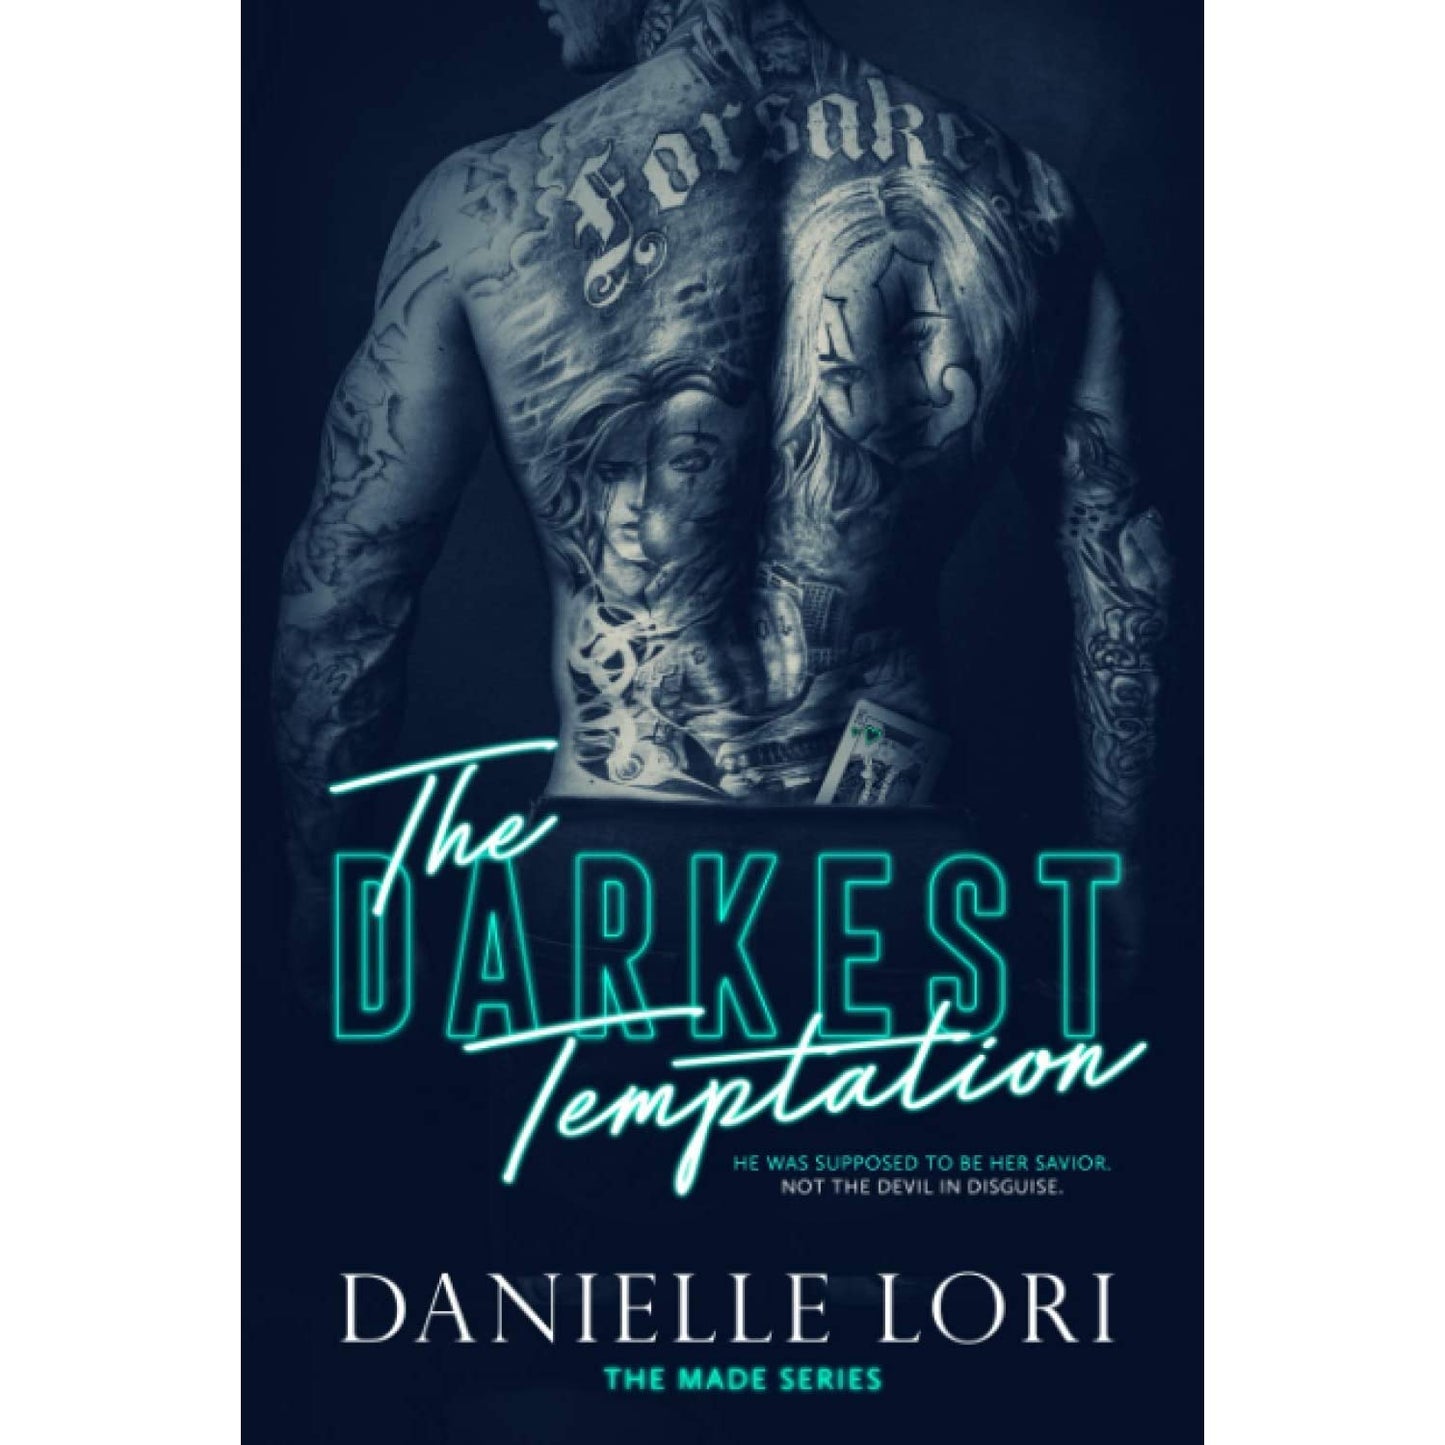 The Darkest Temptation by Danielle Lori (Paperback)